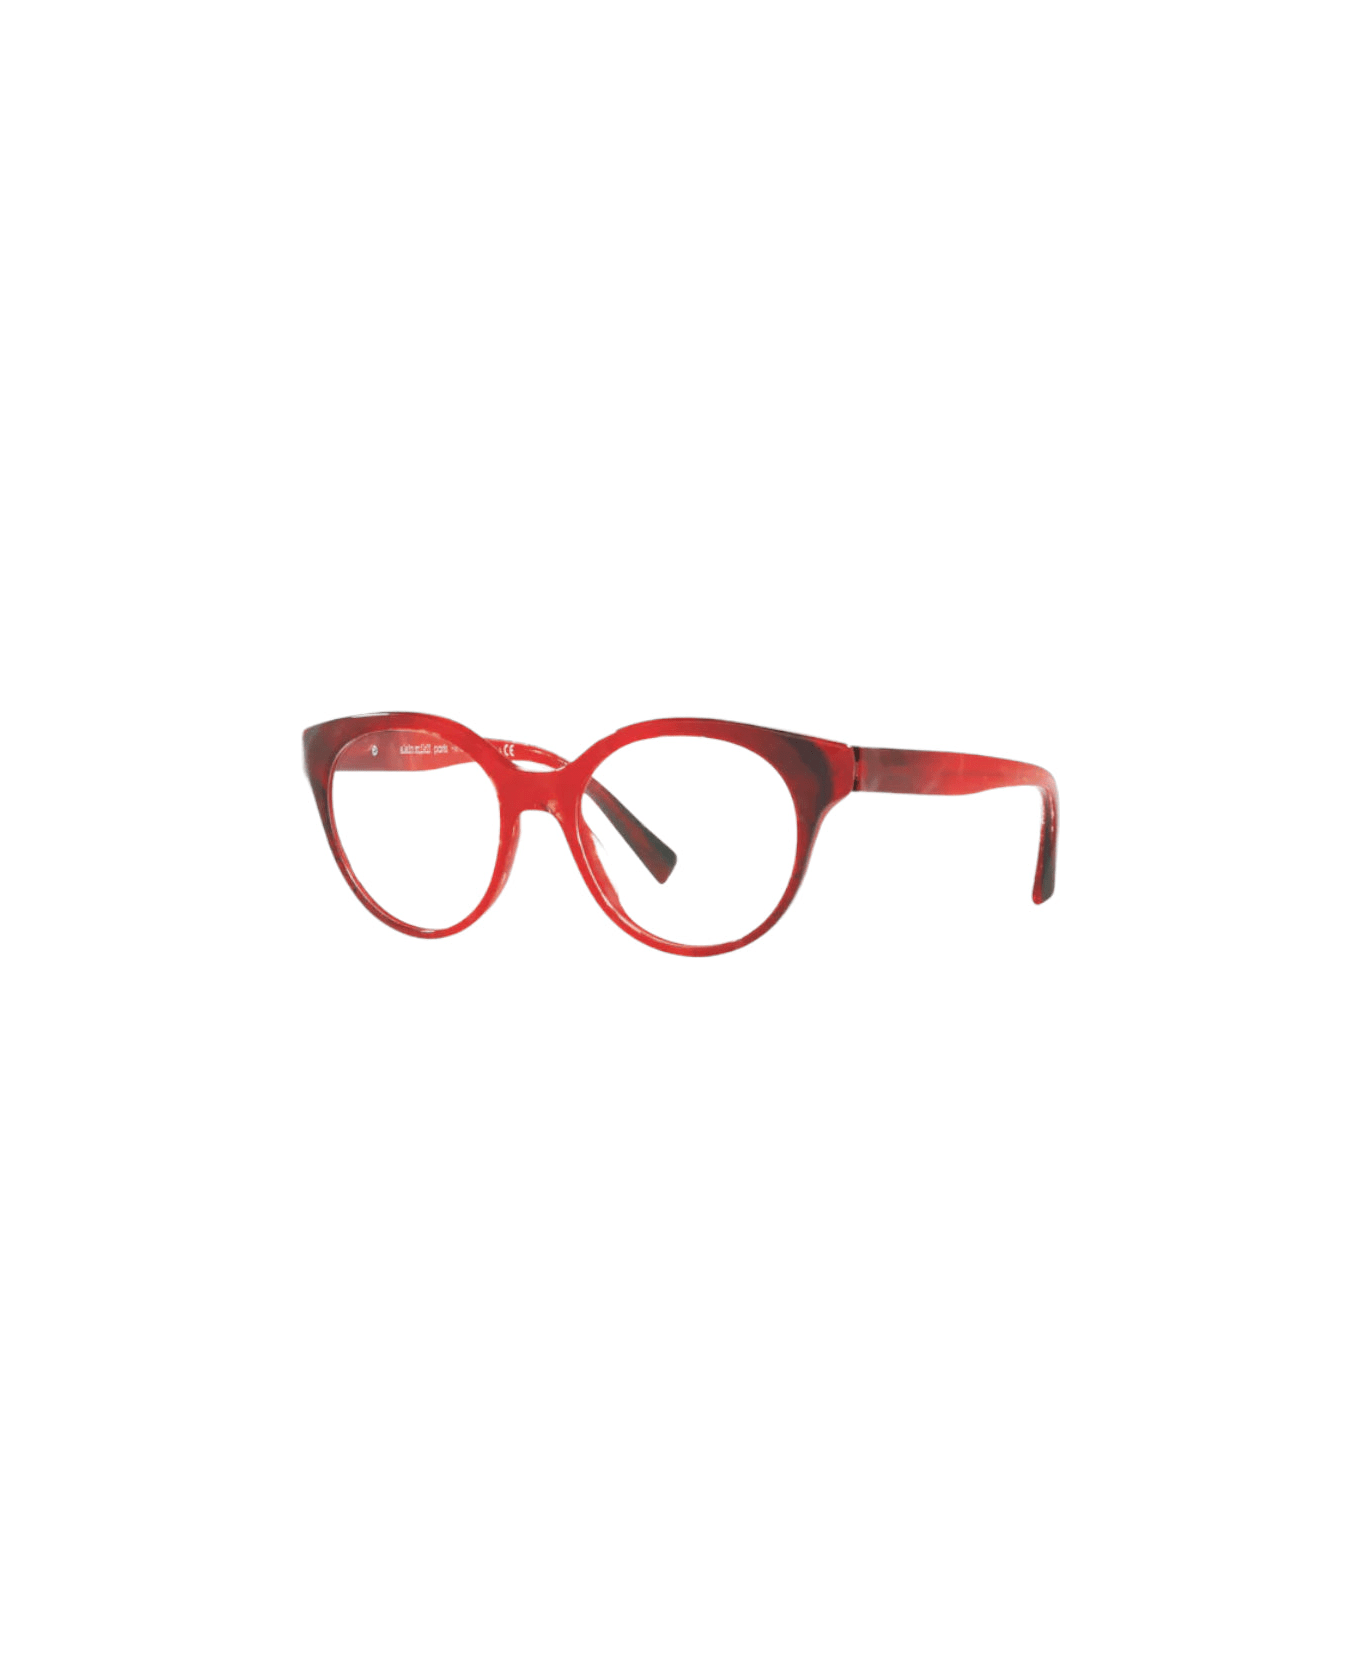 Alain Mikli Madolyn - 3097 - Red / Black Glasses